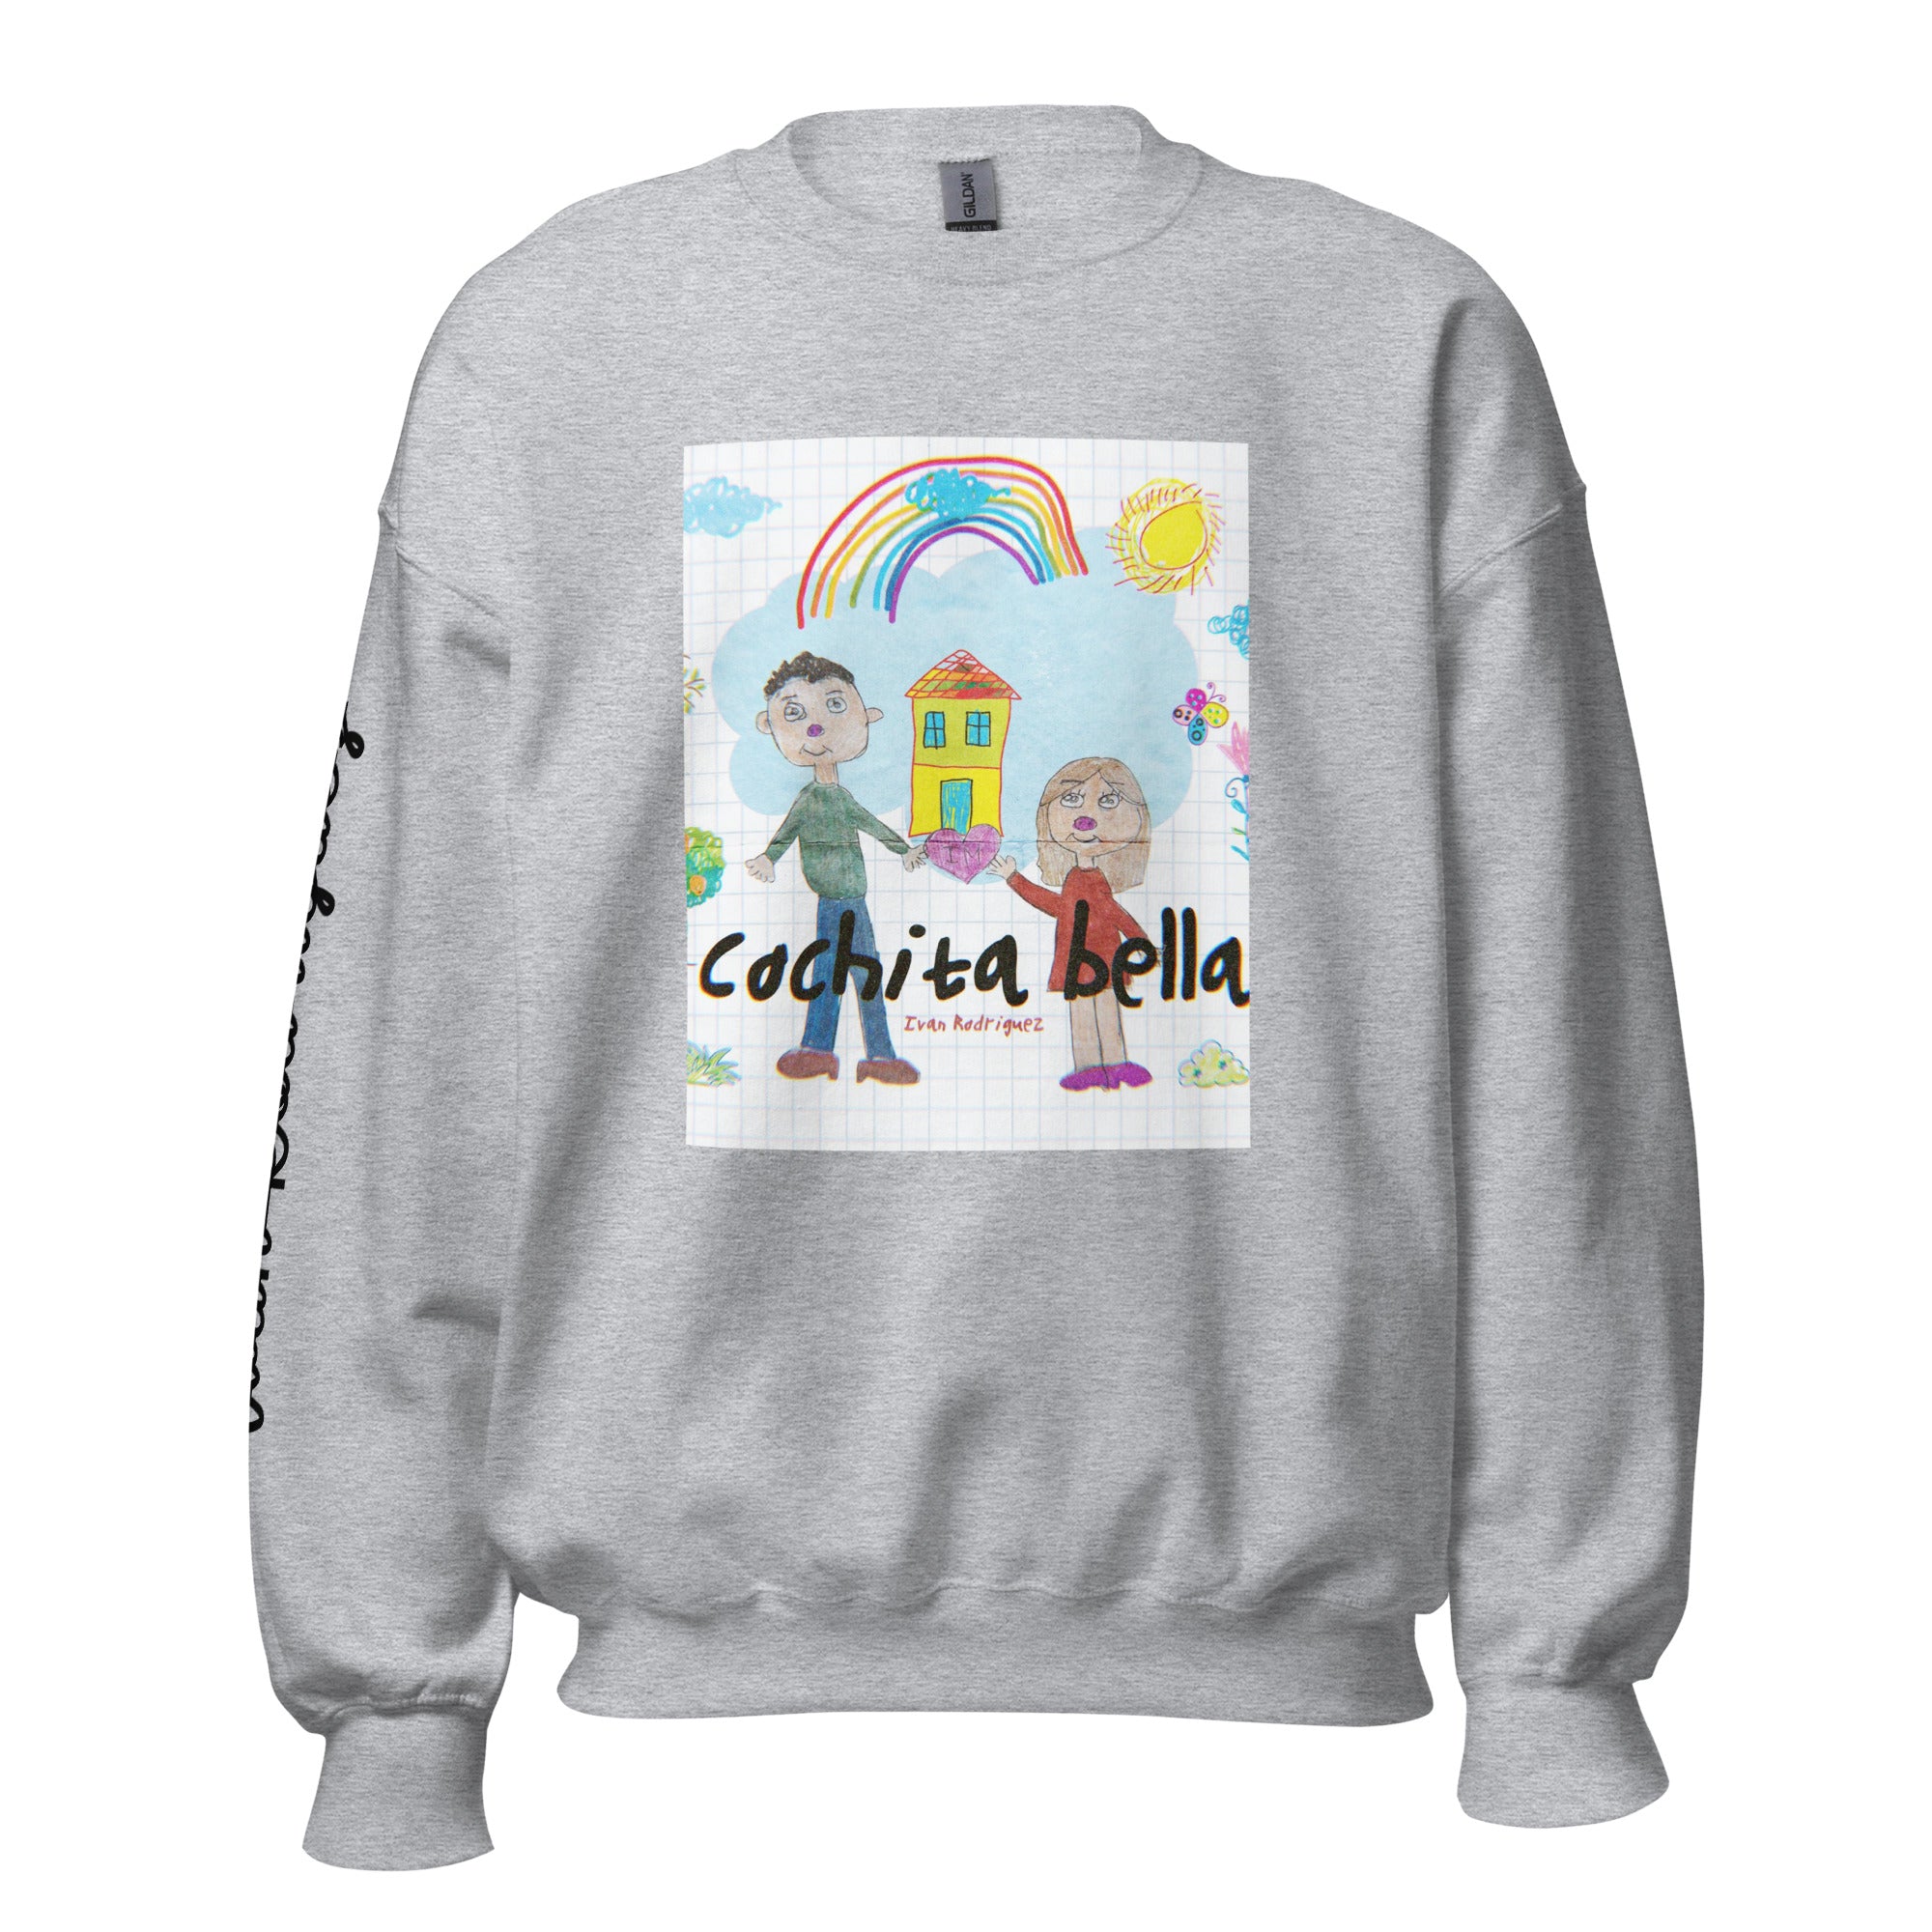 Ivan Rodriguez - "Coshita Bella" - Unisex Sweatshirt